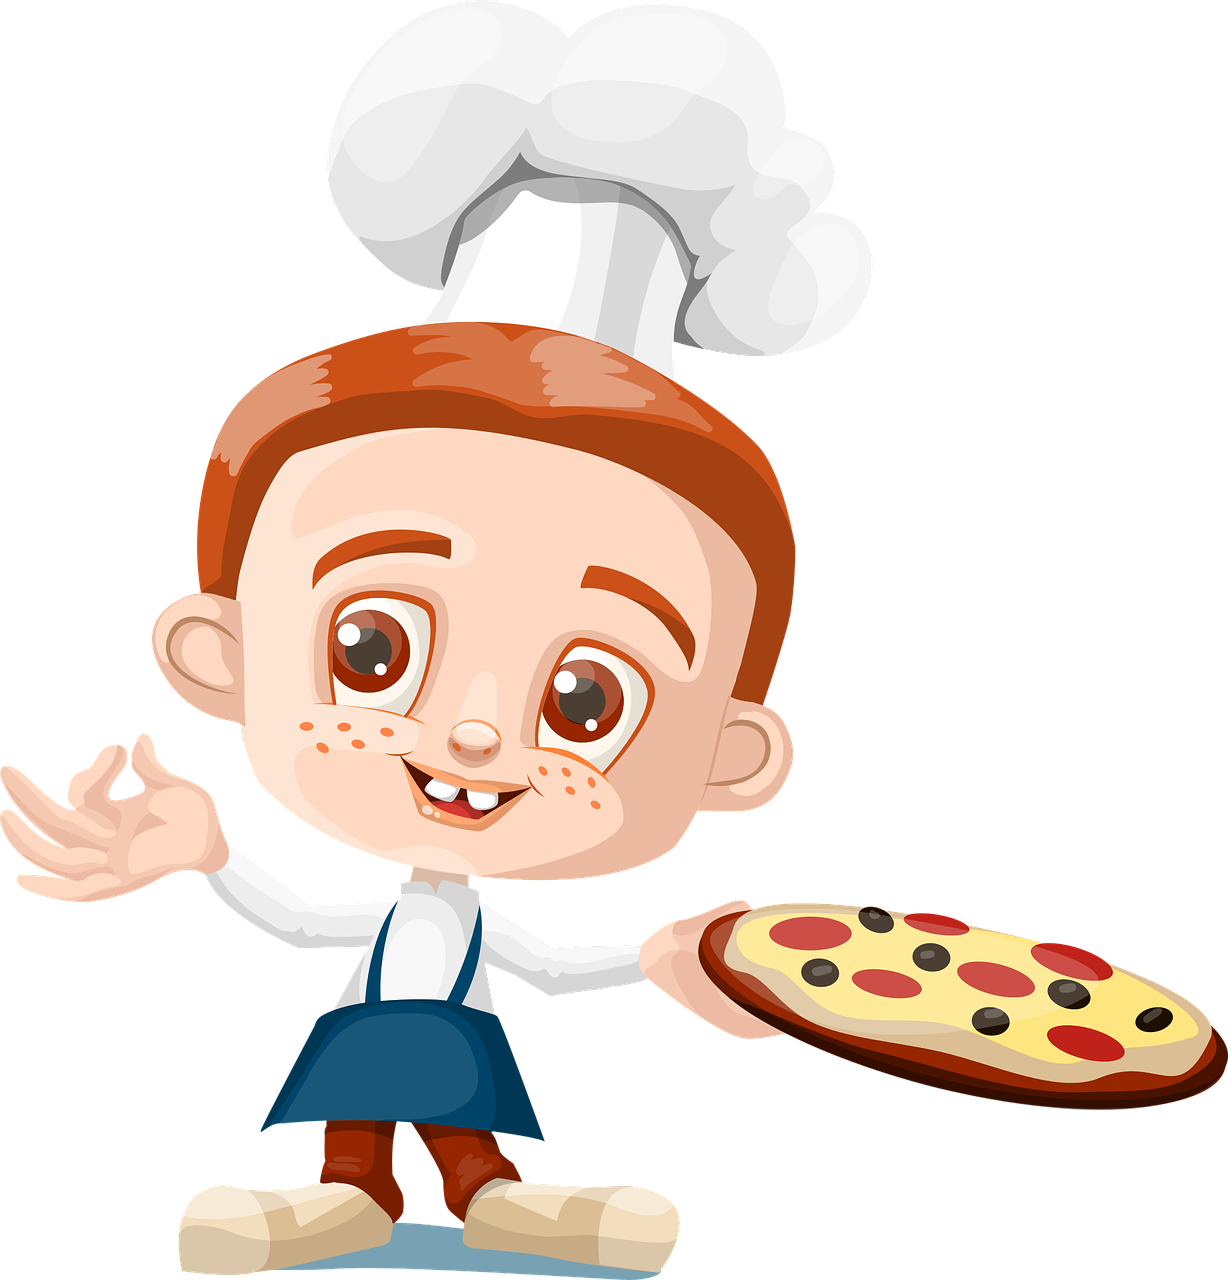 a cartoon boy in a chef's hat holding a pizza, a cartoon, by Nazmi Ziya Güran, pixabay, on black background, animated cartoon series, 8 k cartoon illustration, mascot illustration